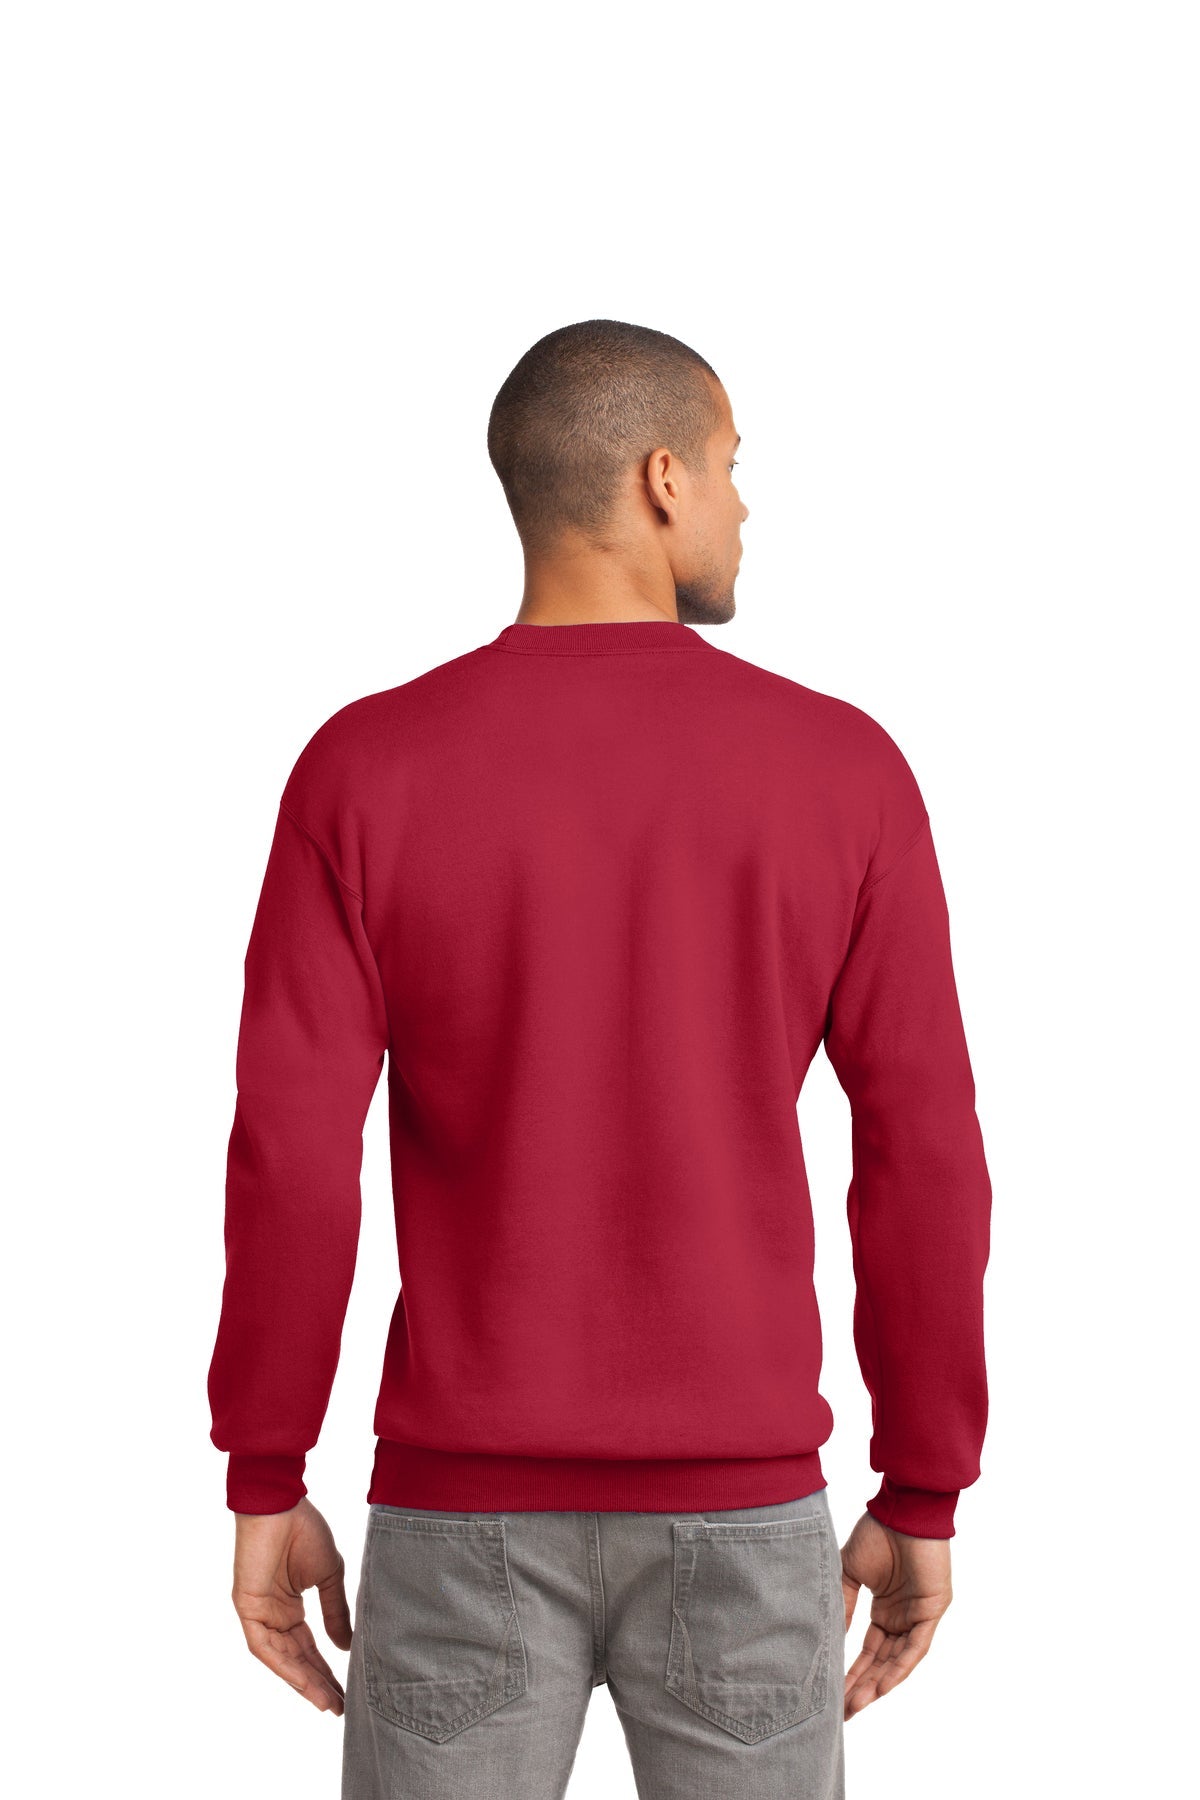 port & company_pc90t _red_company_logo_sweatshirts